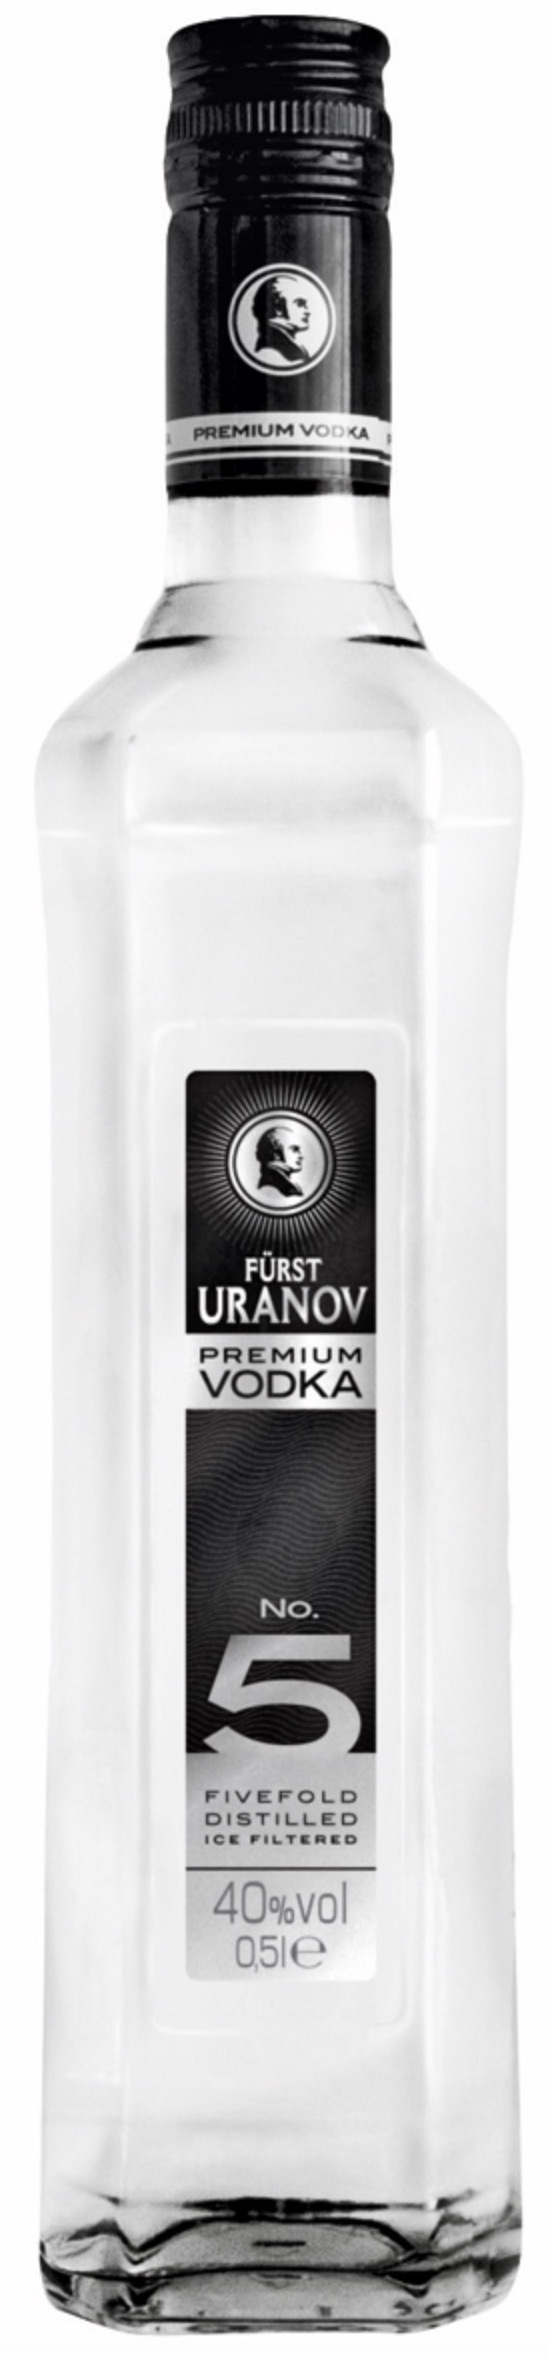 Fürst Uranov Premium Vodka No.5 40% vol. 0,5L